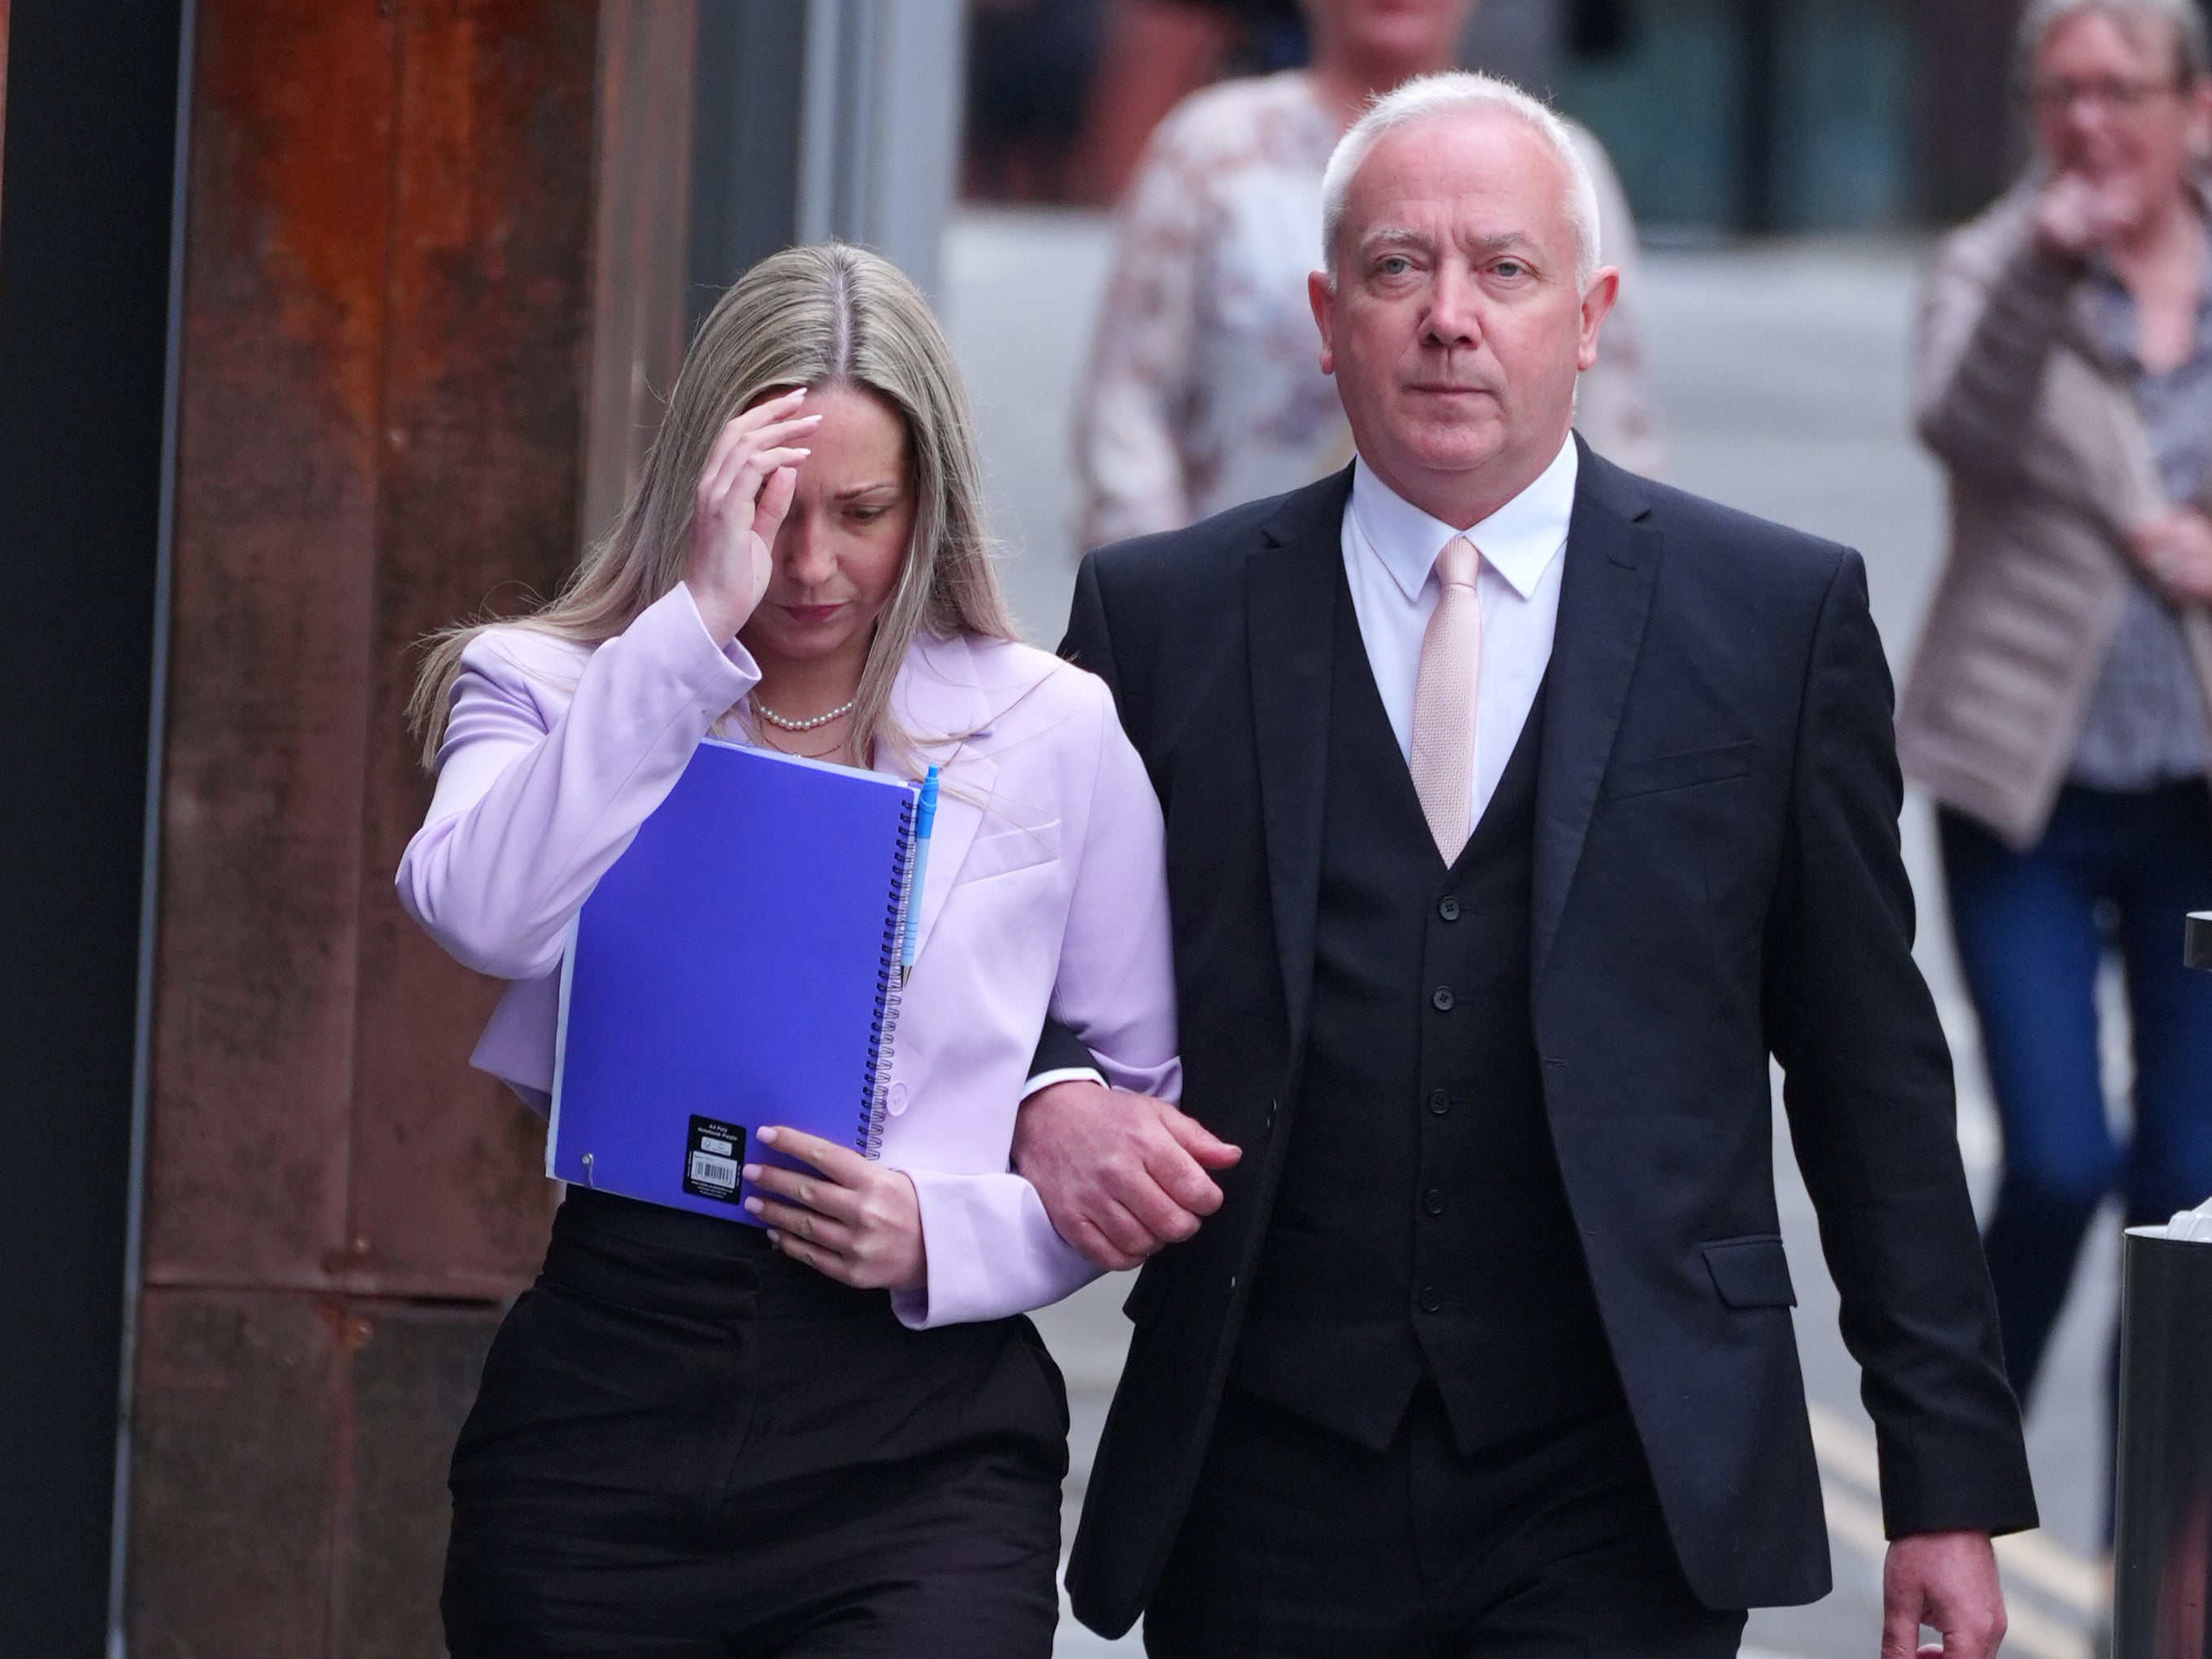 Schoolteacher Joynes arrives at Manchester Crown Court on Monday